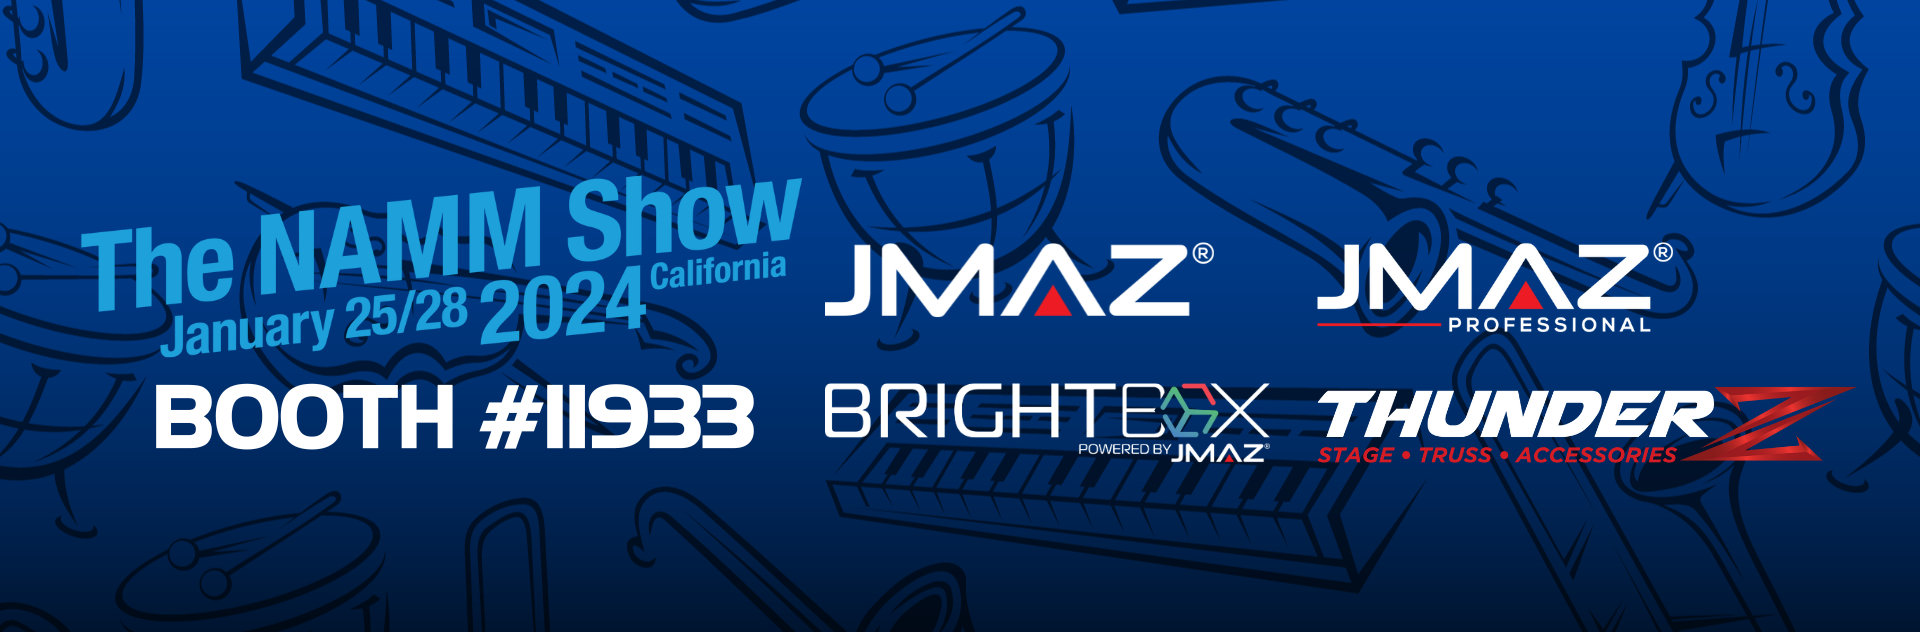 JMAZ GROUP Illuminates NAMM 2024 Tradeshow